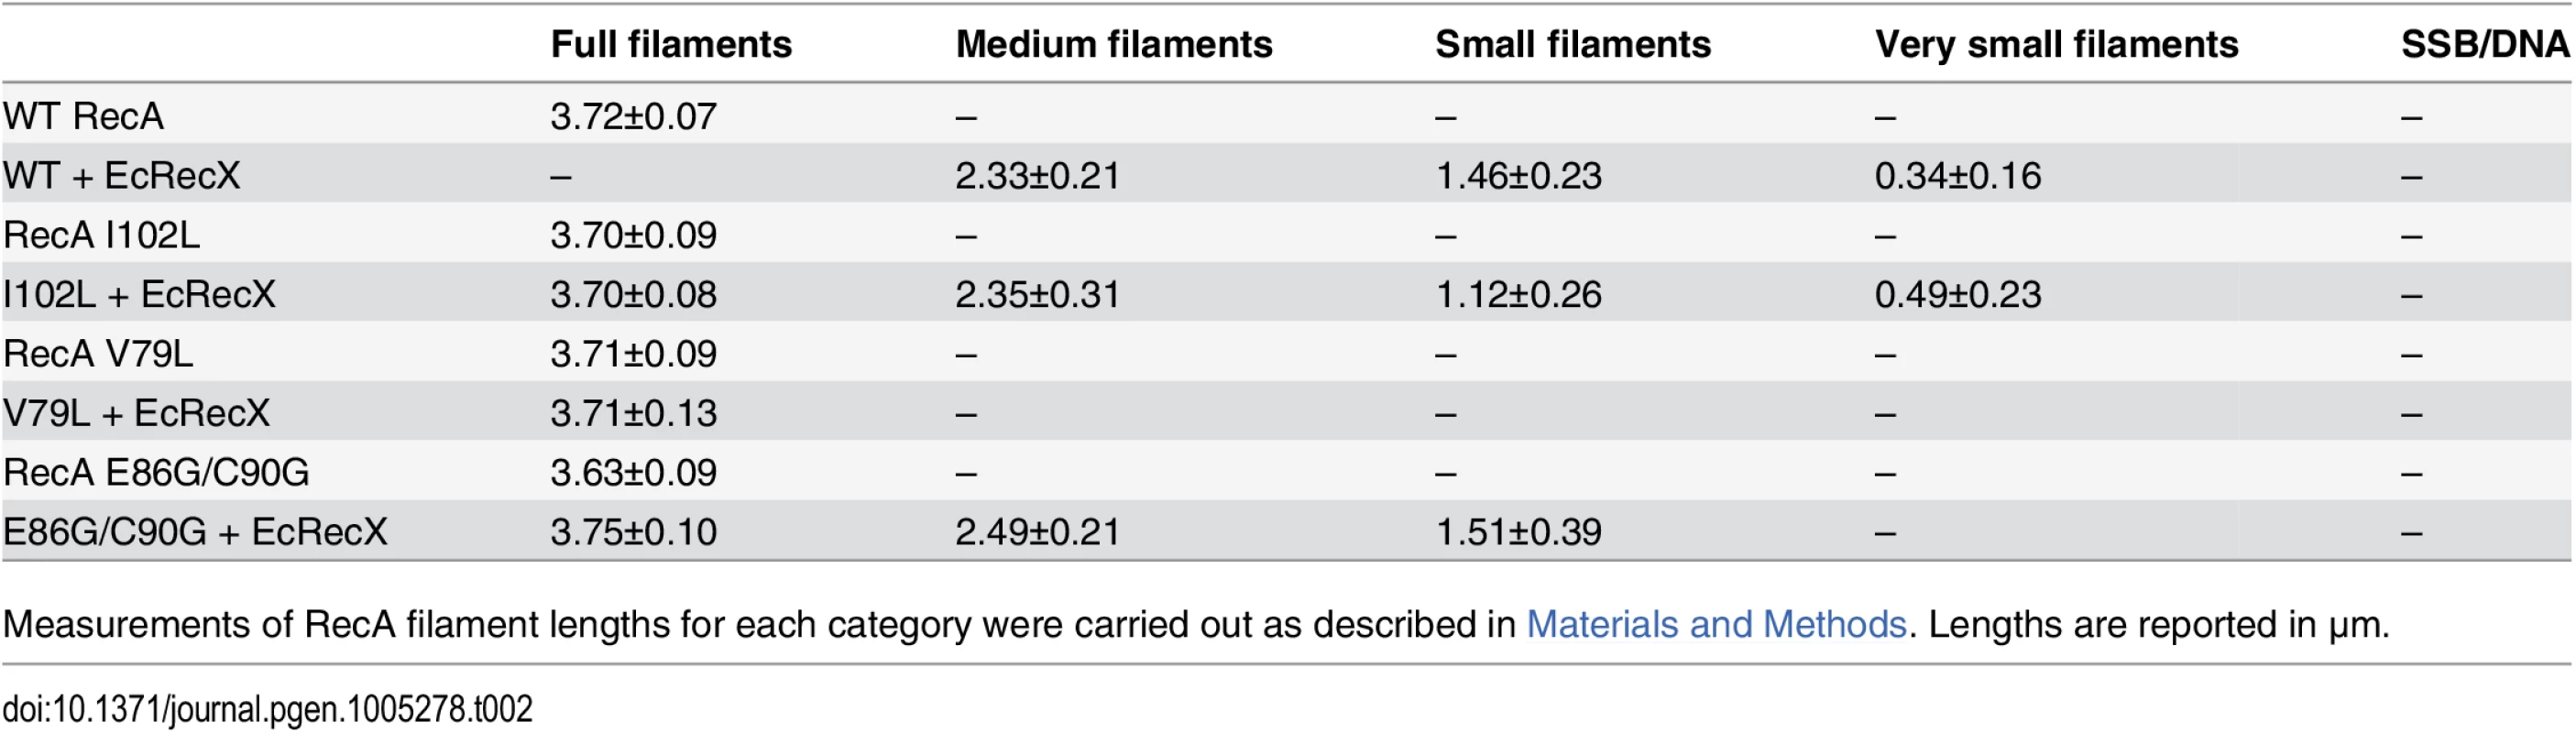 Measurements of RecA filaments of different size categories.